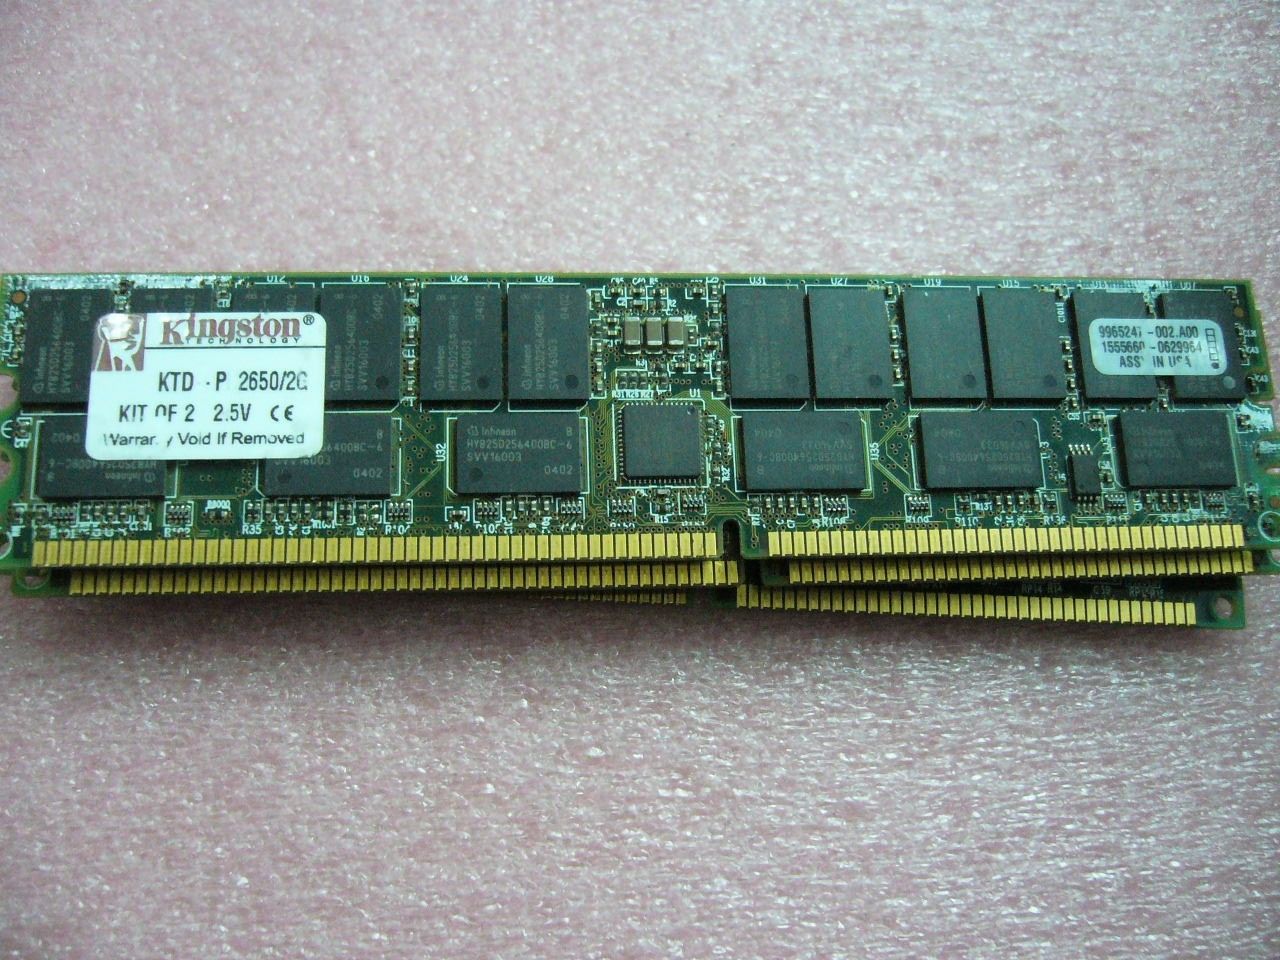 QTY 1x 1GB DDR PC-2100R 266Mhz ECC Registered Server memory Kingston KTD-PE2650 - Click Image to Close